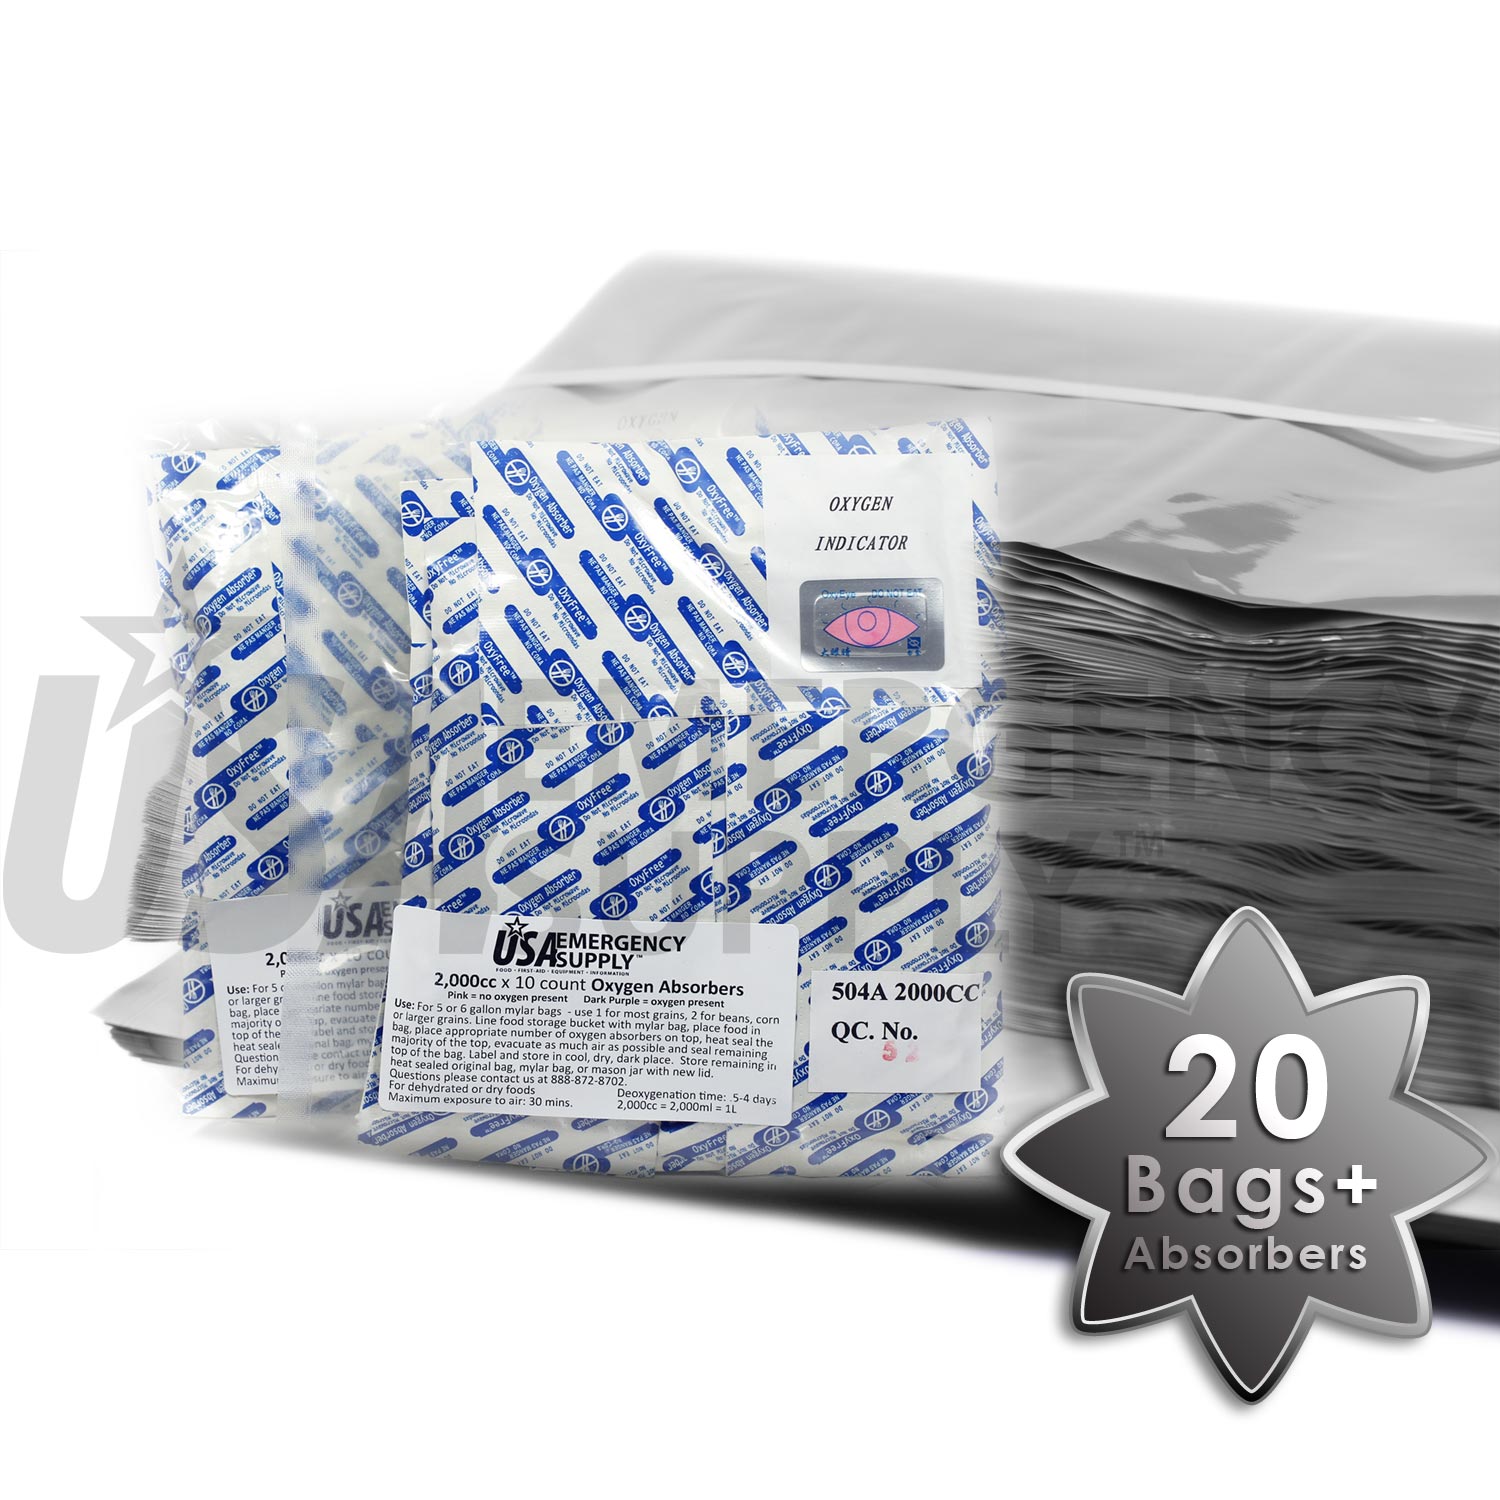 5-5 GALLON 20x30 Mylar Bags + 5-2000 cc Oxygen Absorbers Long Term Foo –  Food Magic Seal